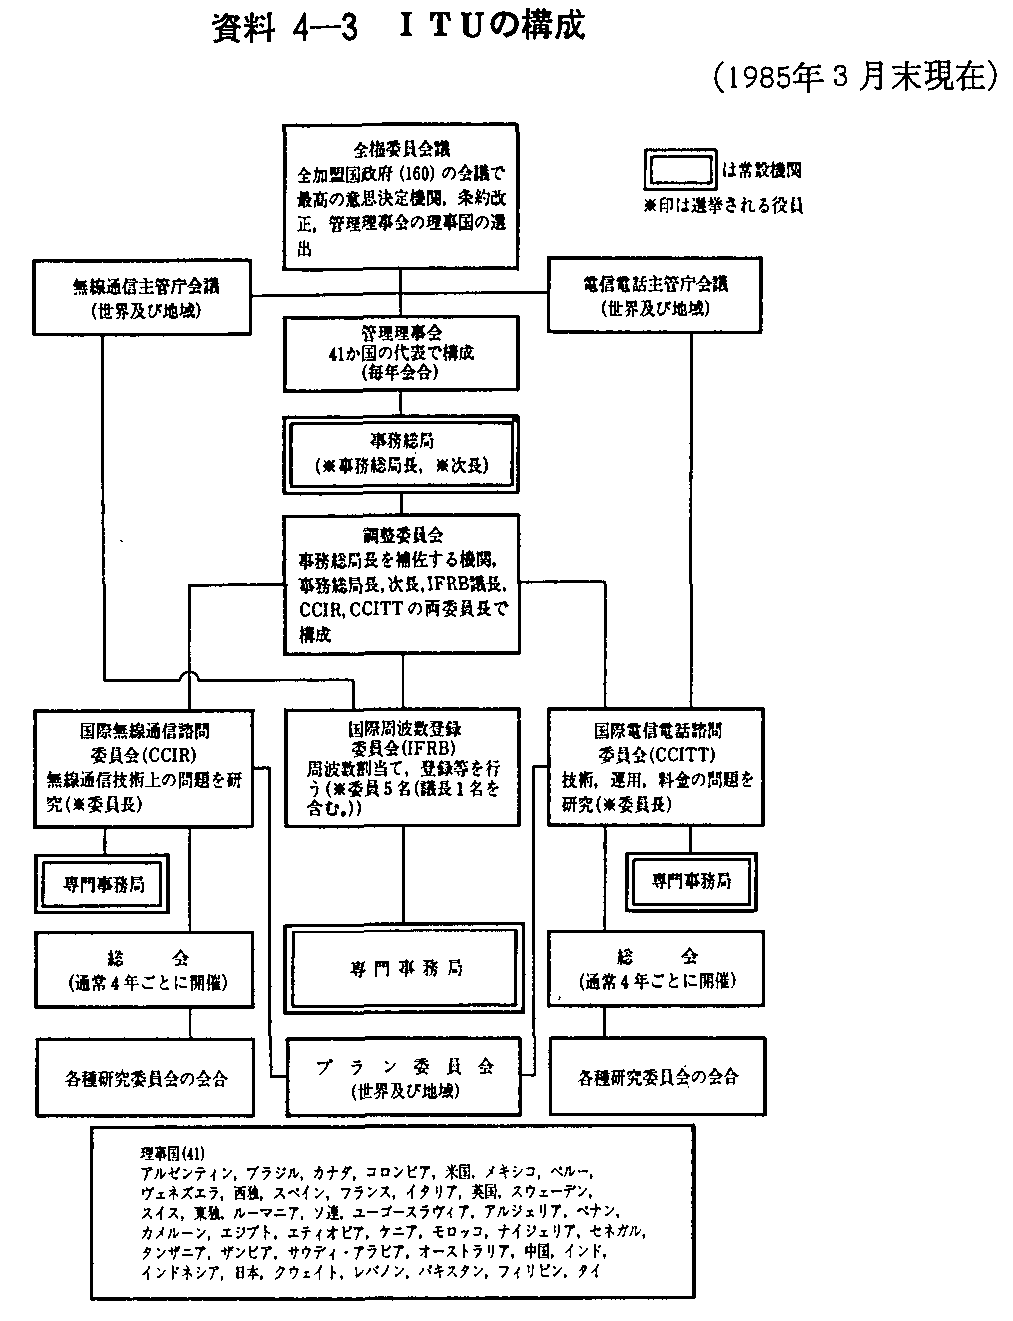 資料4-3 ITUの構成(1983年3月末現在)